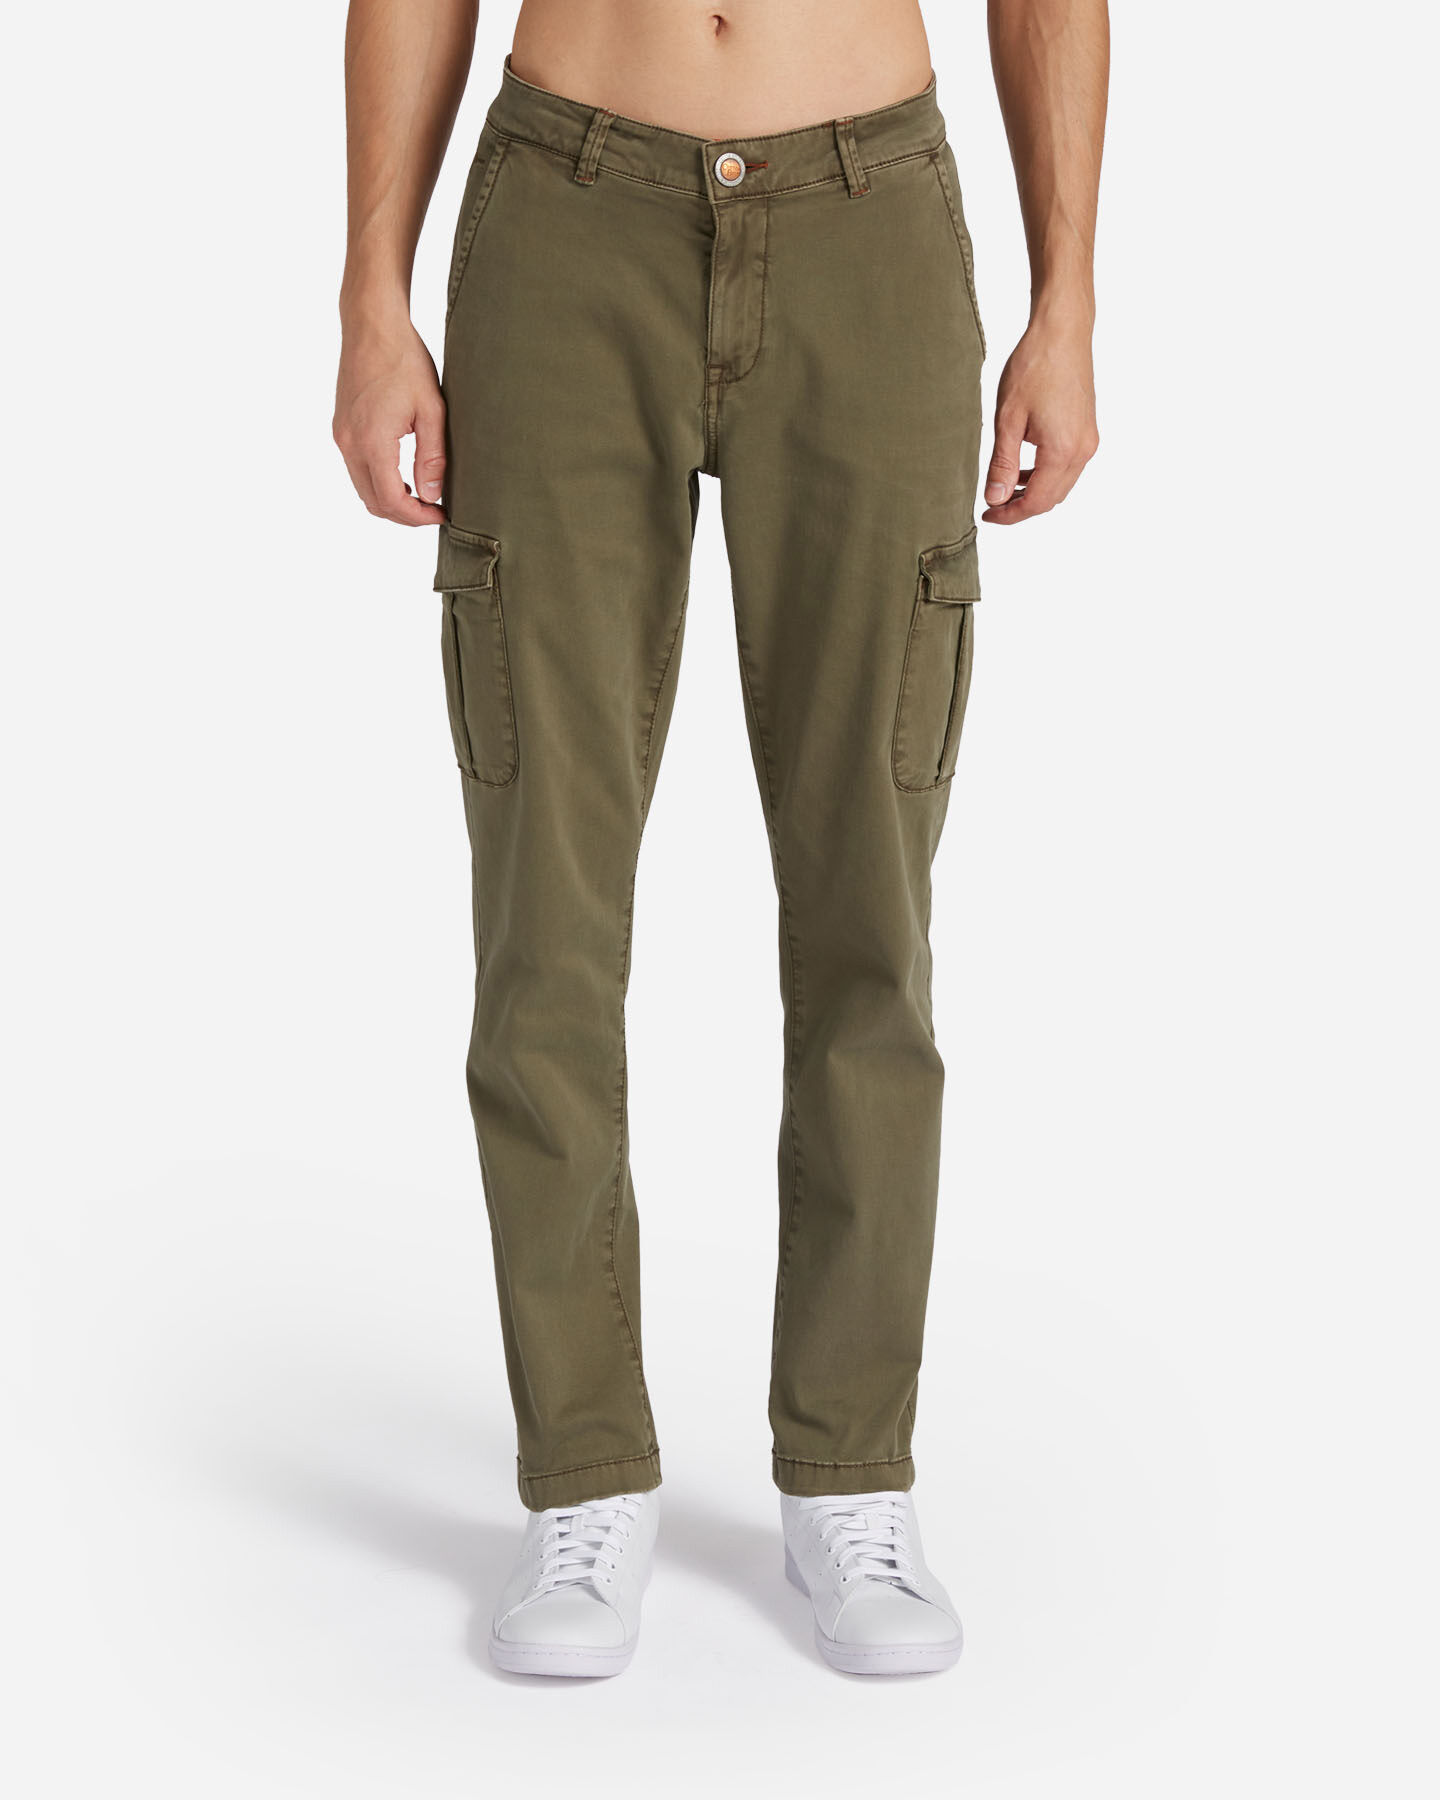  Pantalone COTTON BELT URBAN CARGO M S4127007|1124|30 scatto 0